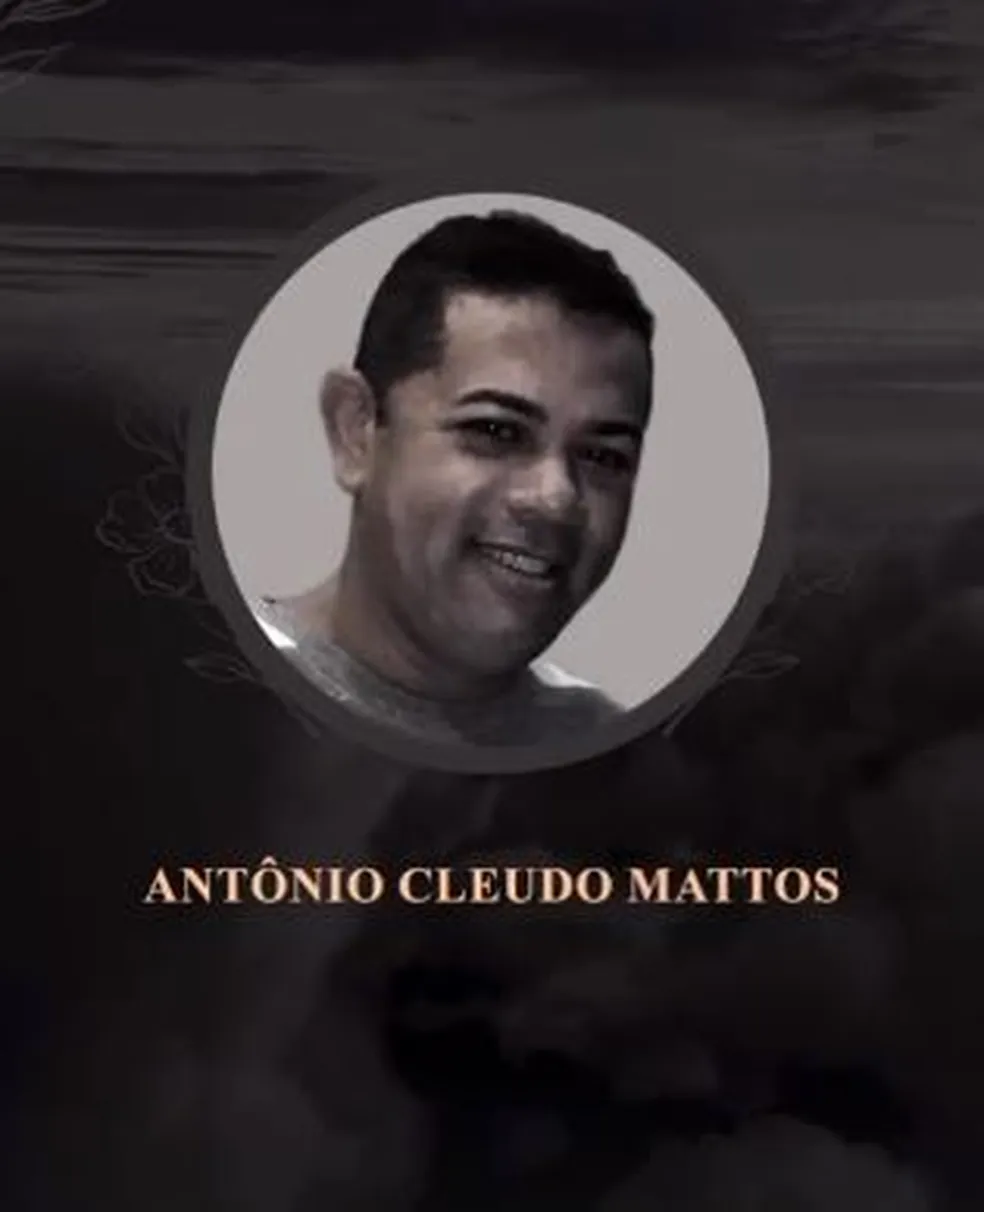 Antônio Cleudo